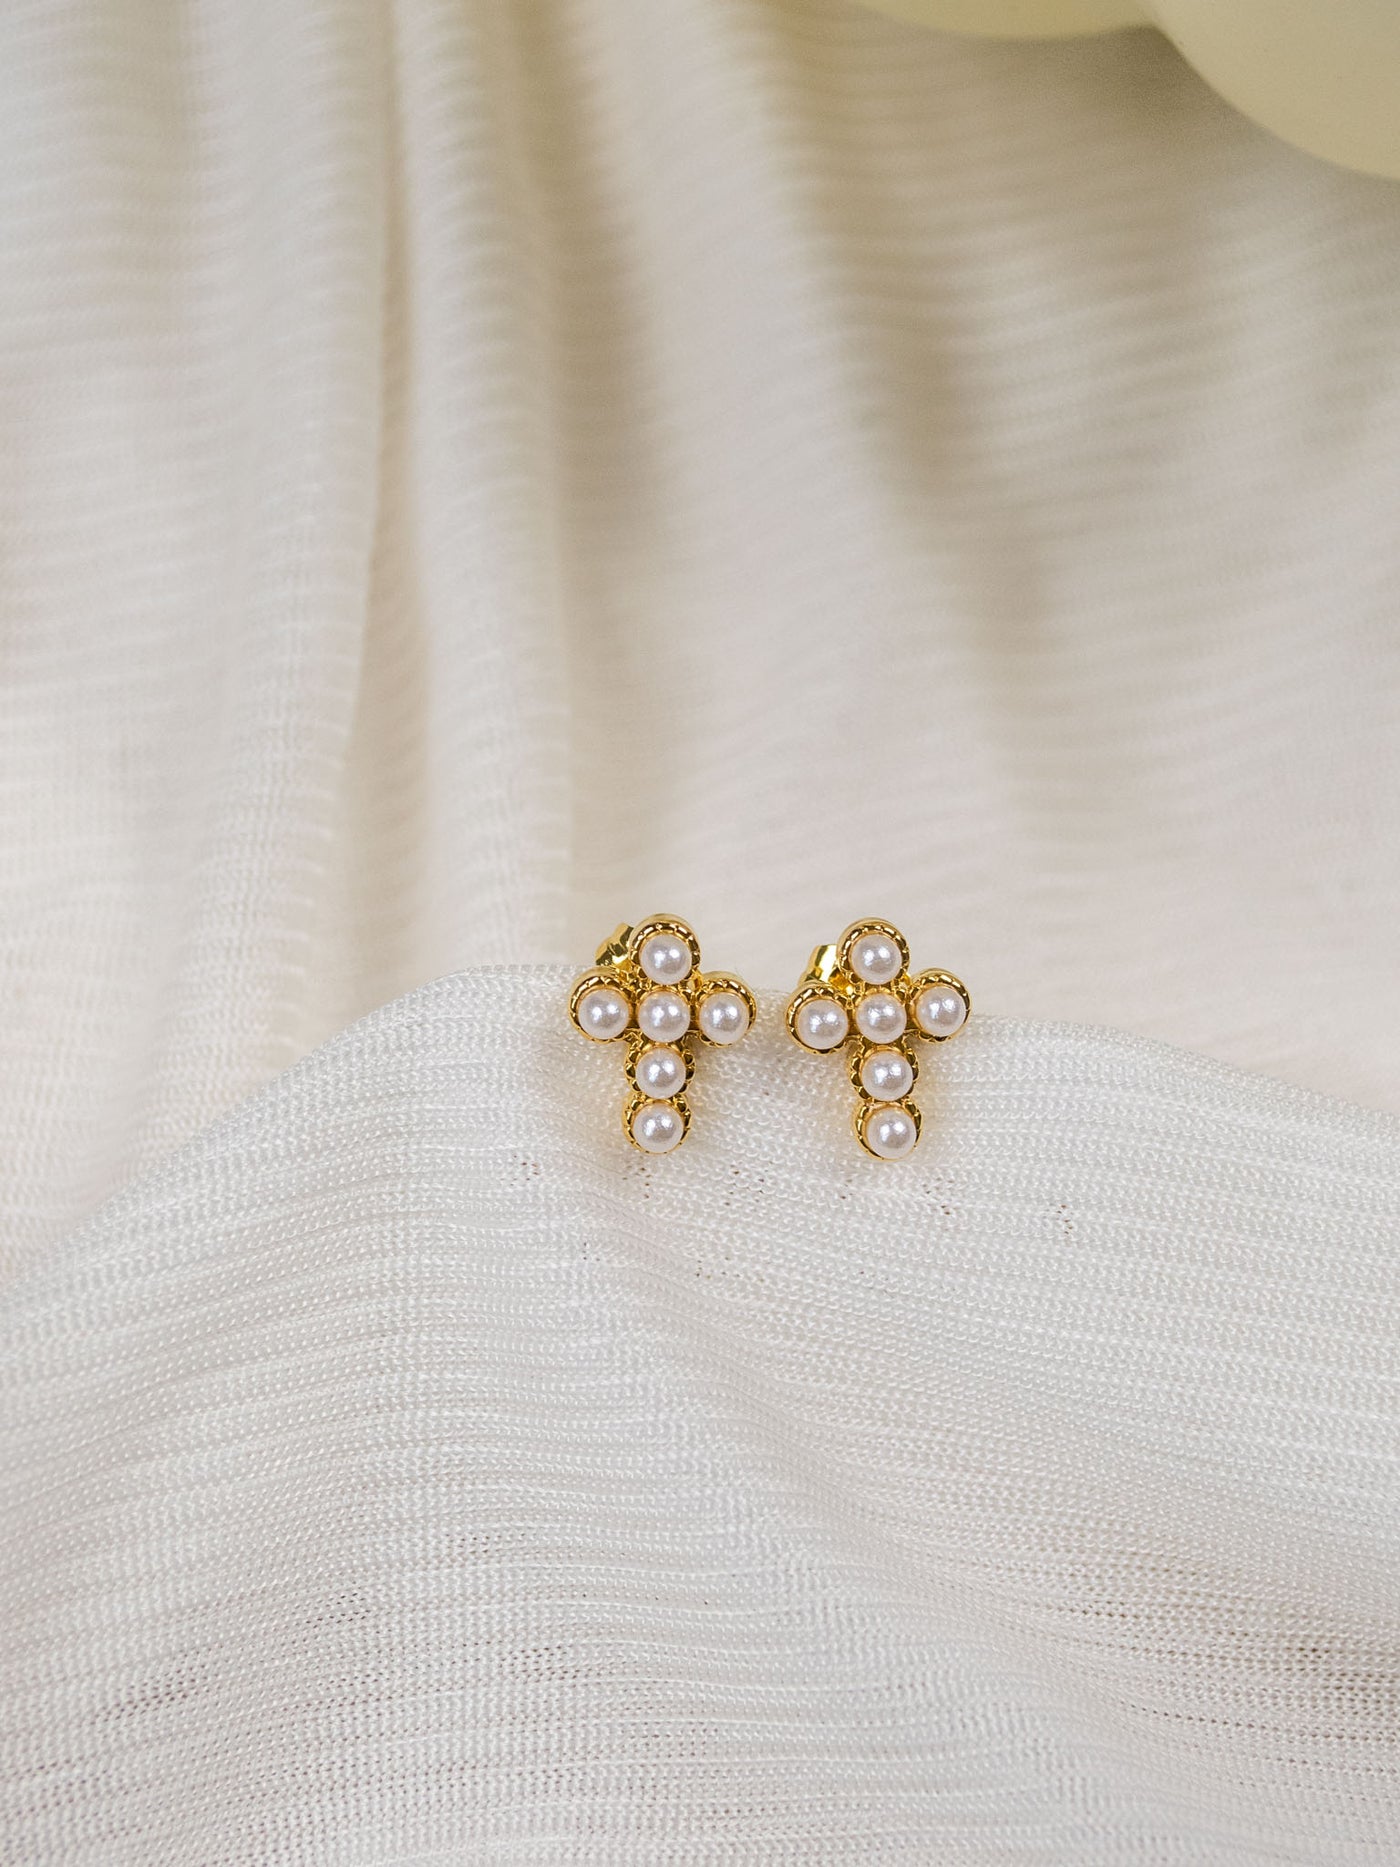 A pair of gold mini pearl cross studs.